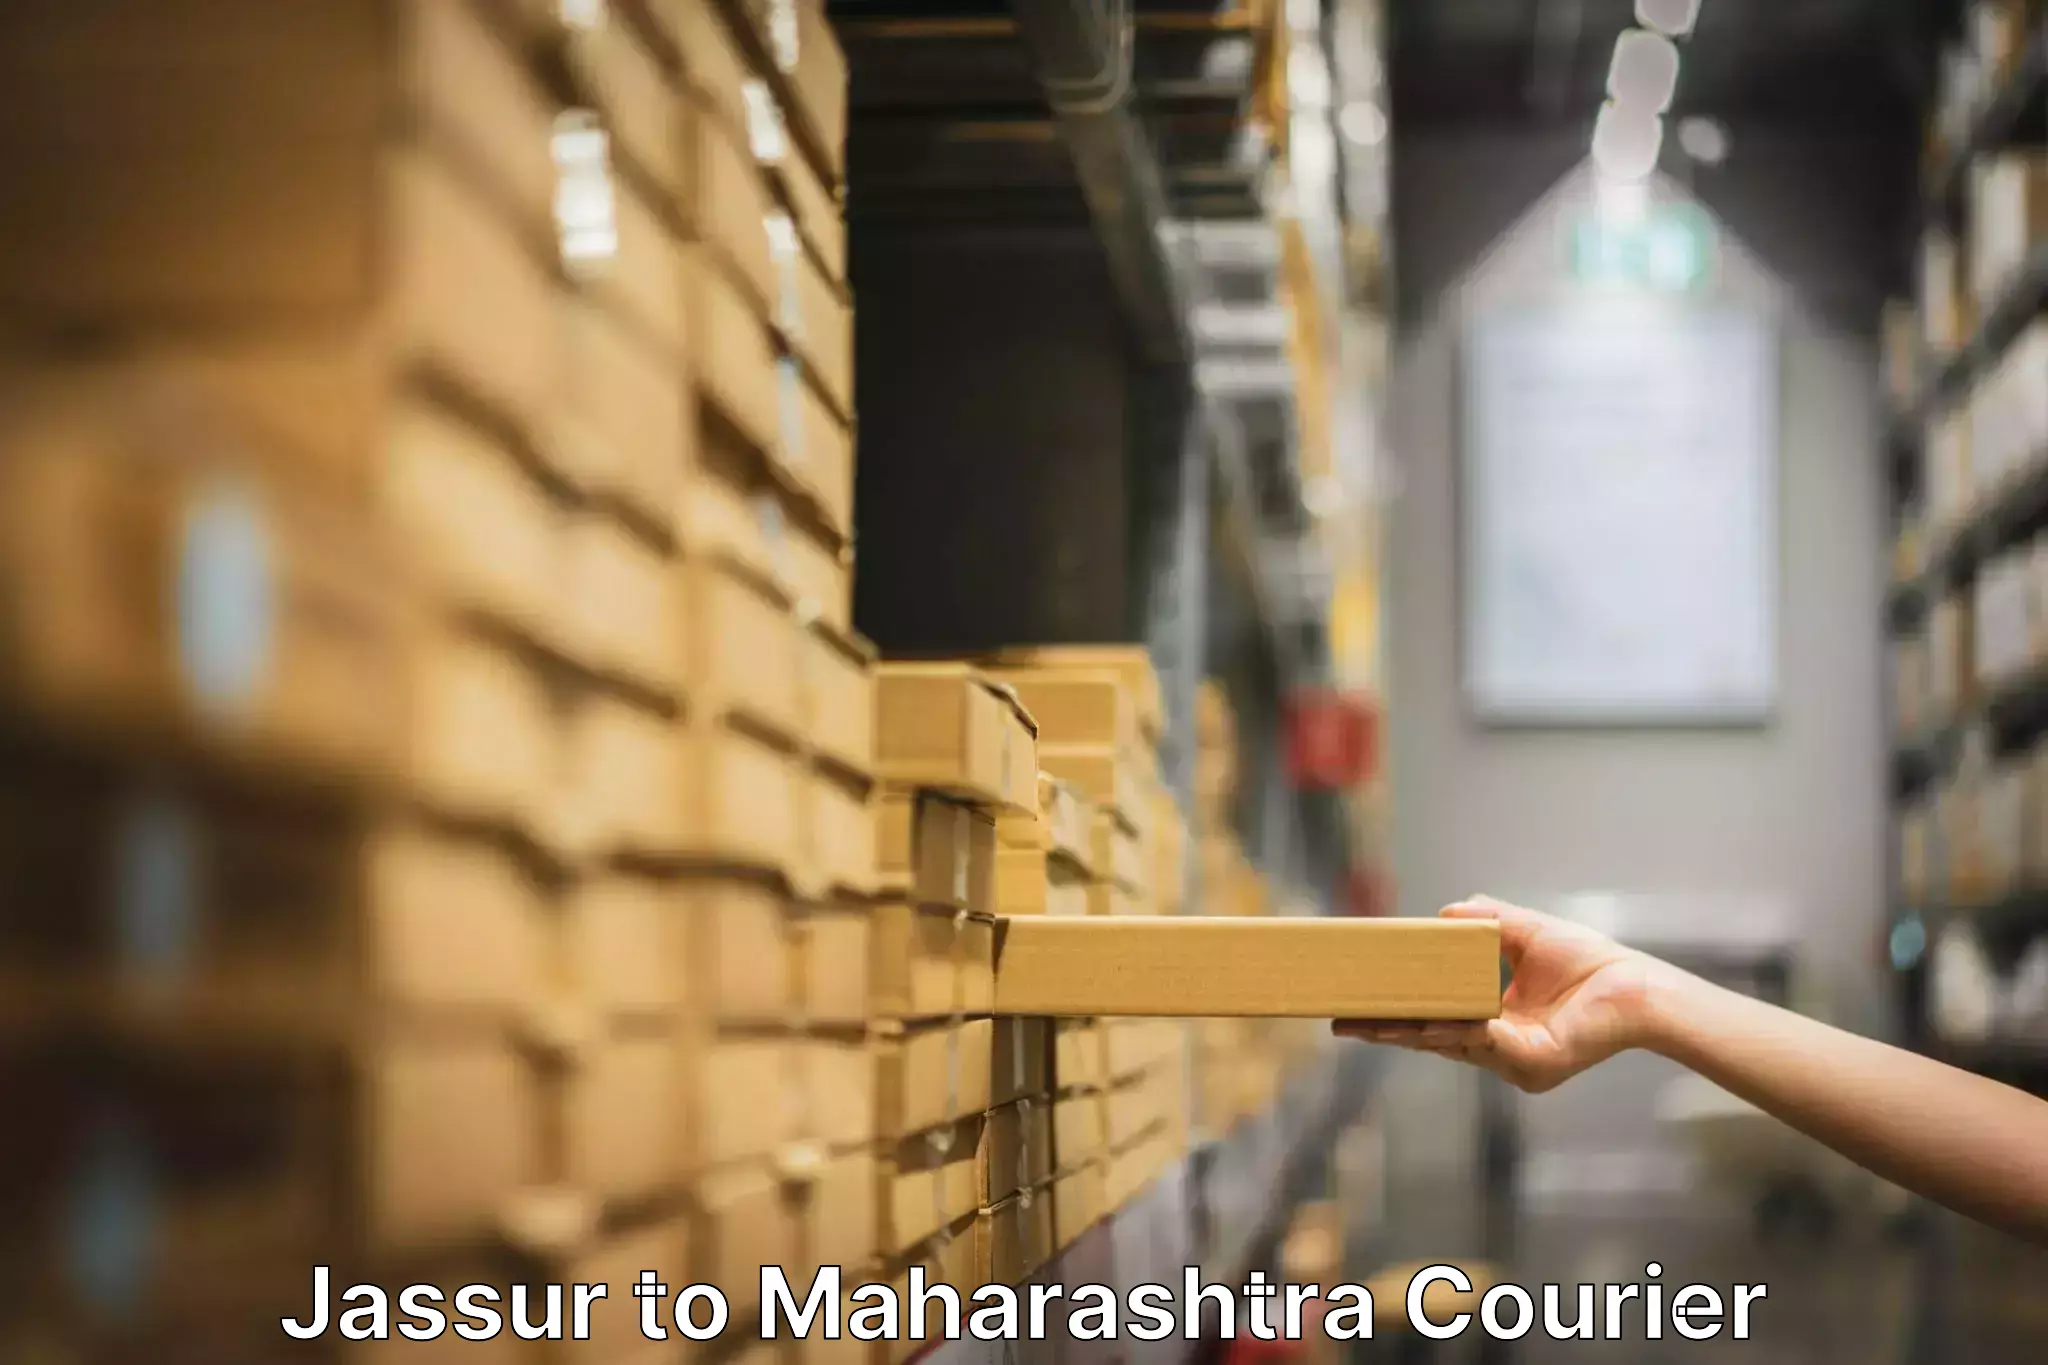 Furniture delivery service Jassur to Maharashtra